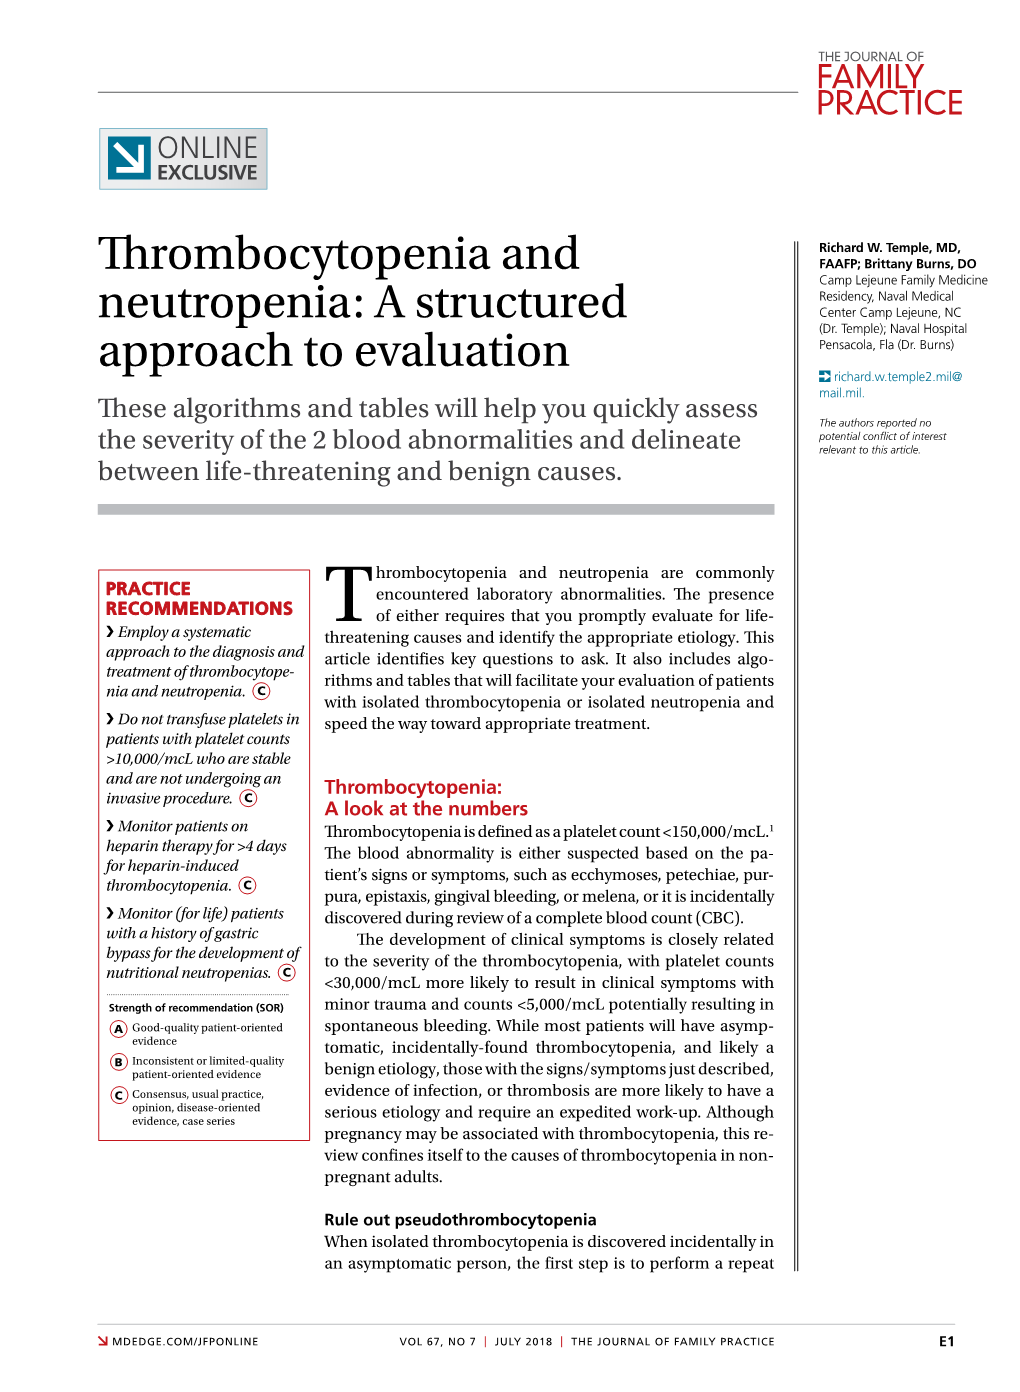 Thrombocytopenia and Neutropenia